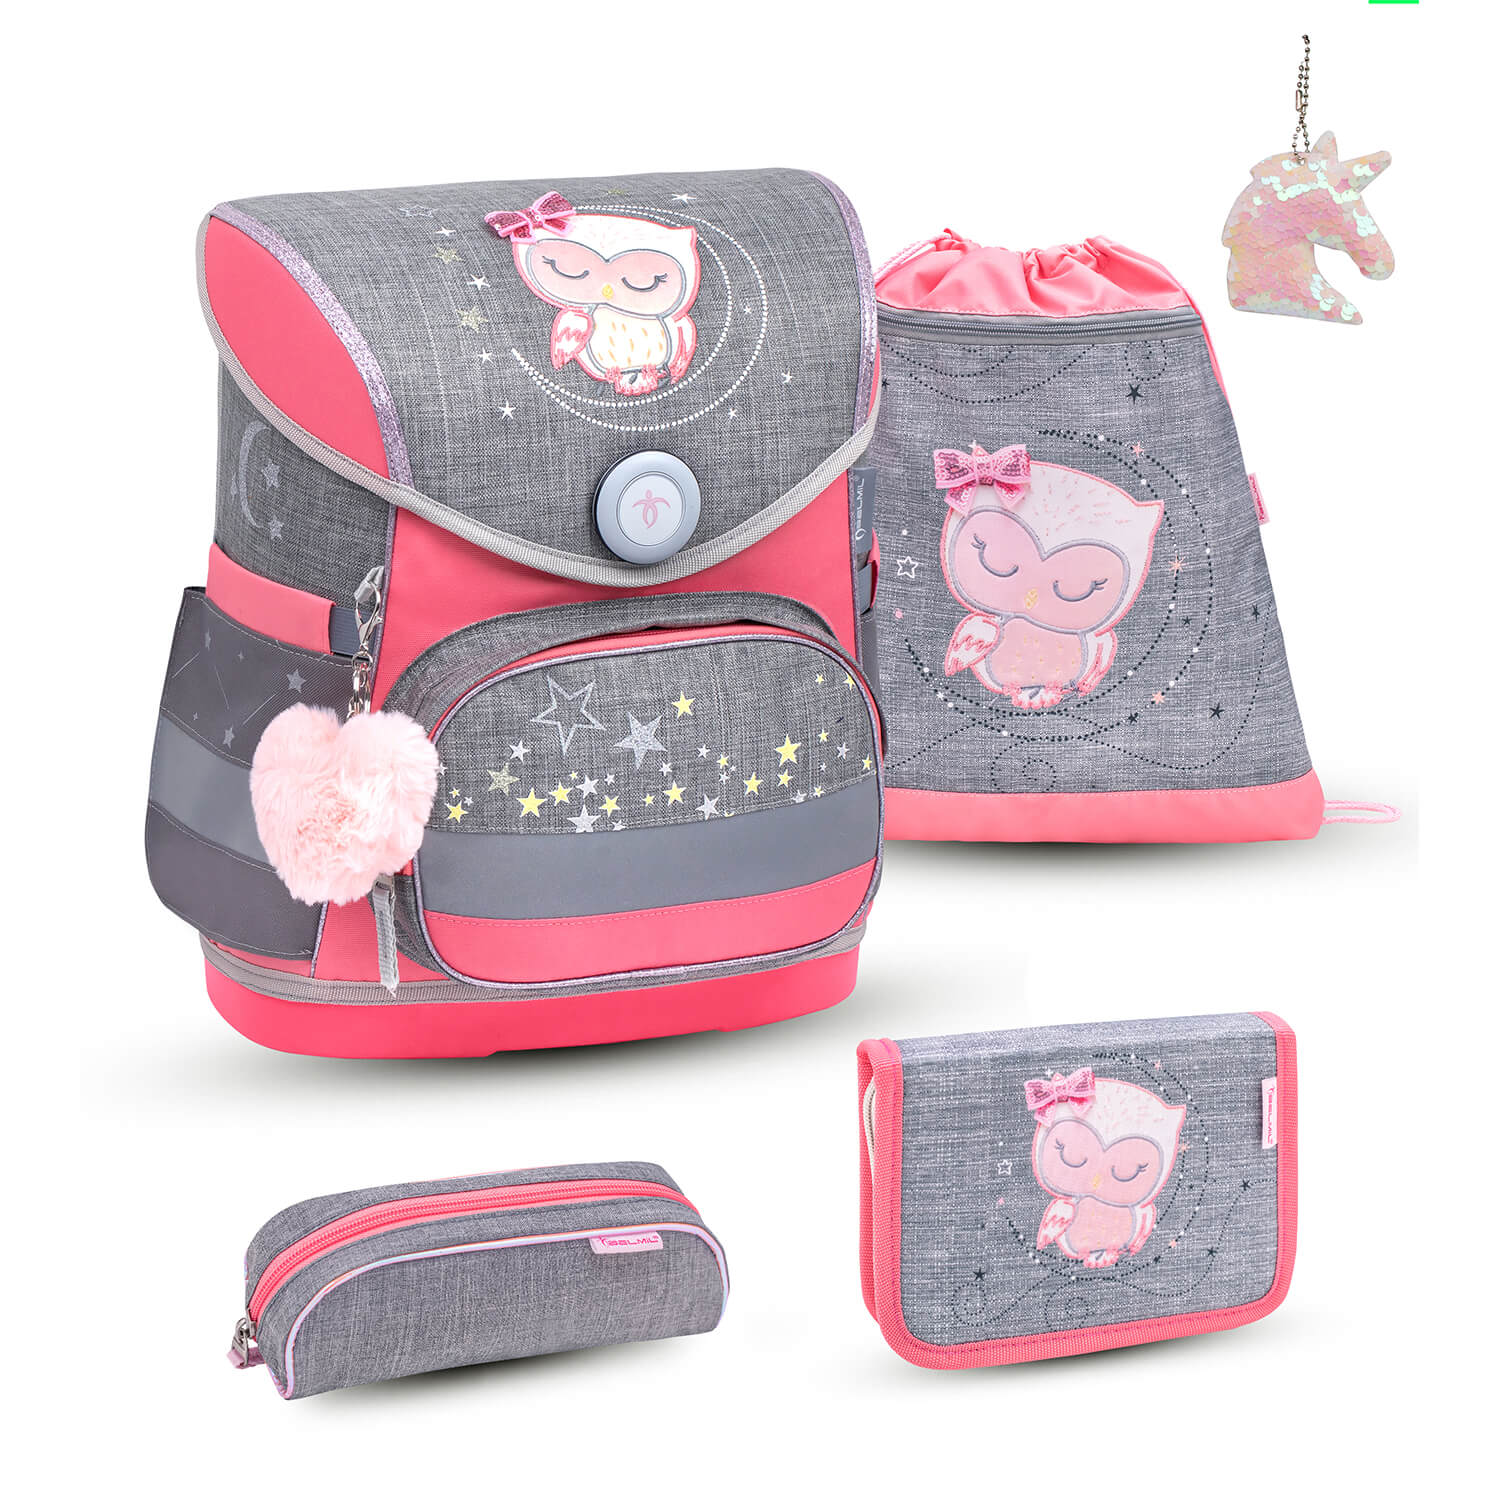 Compact Little Owl schoolbag set 5 pcs with GRATIS keychain